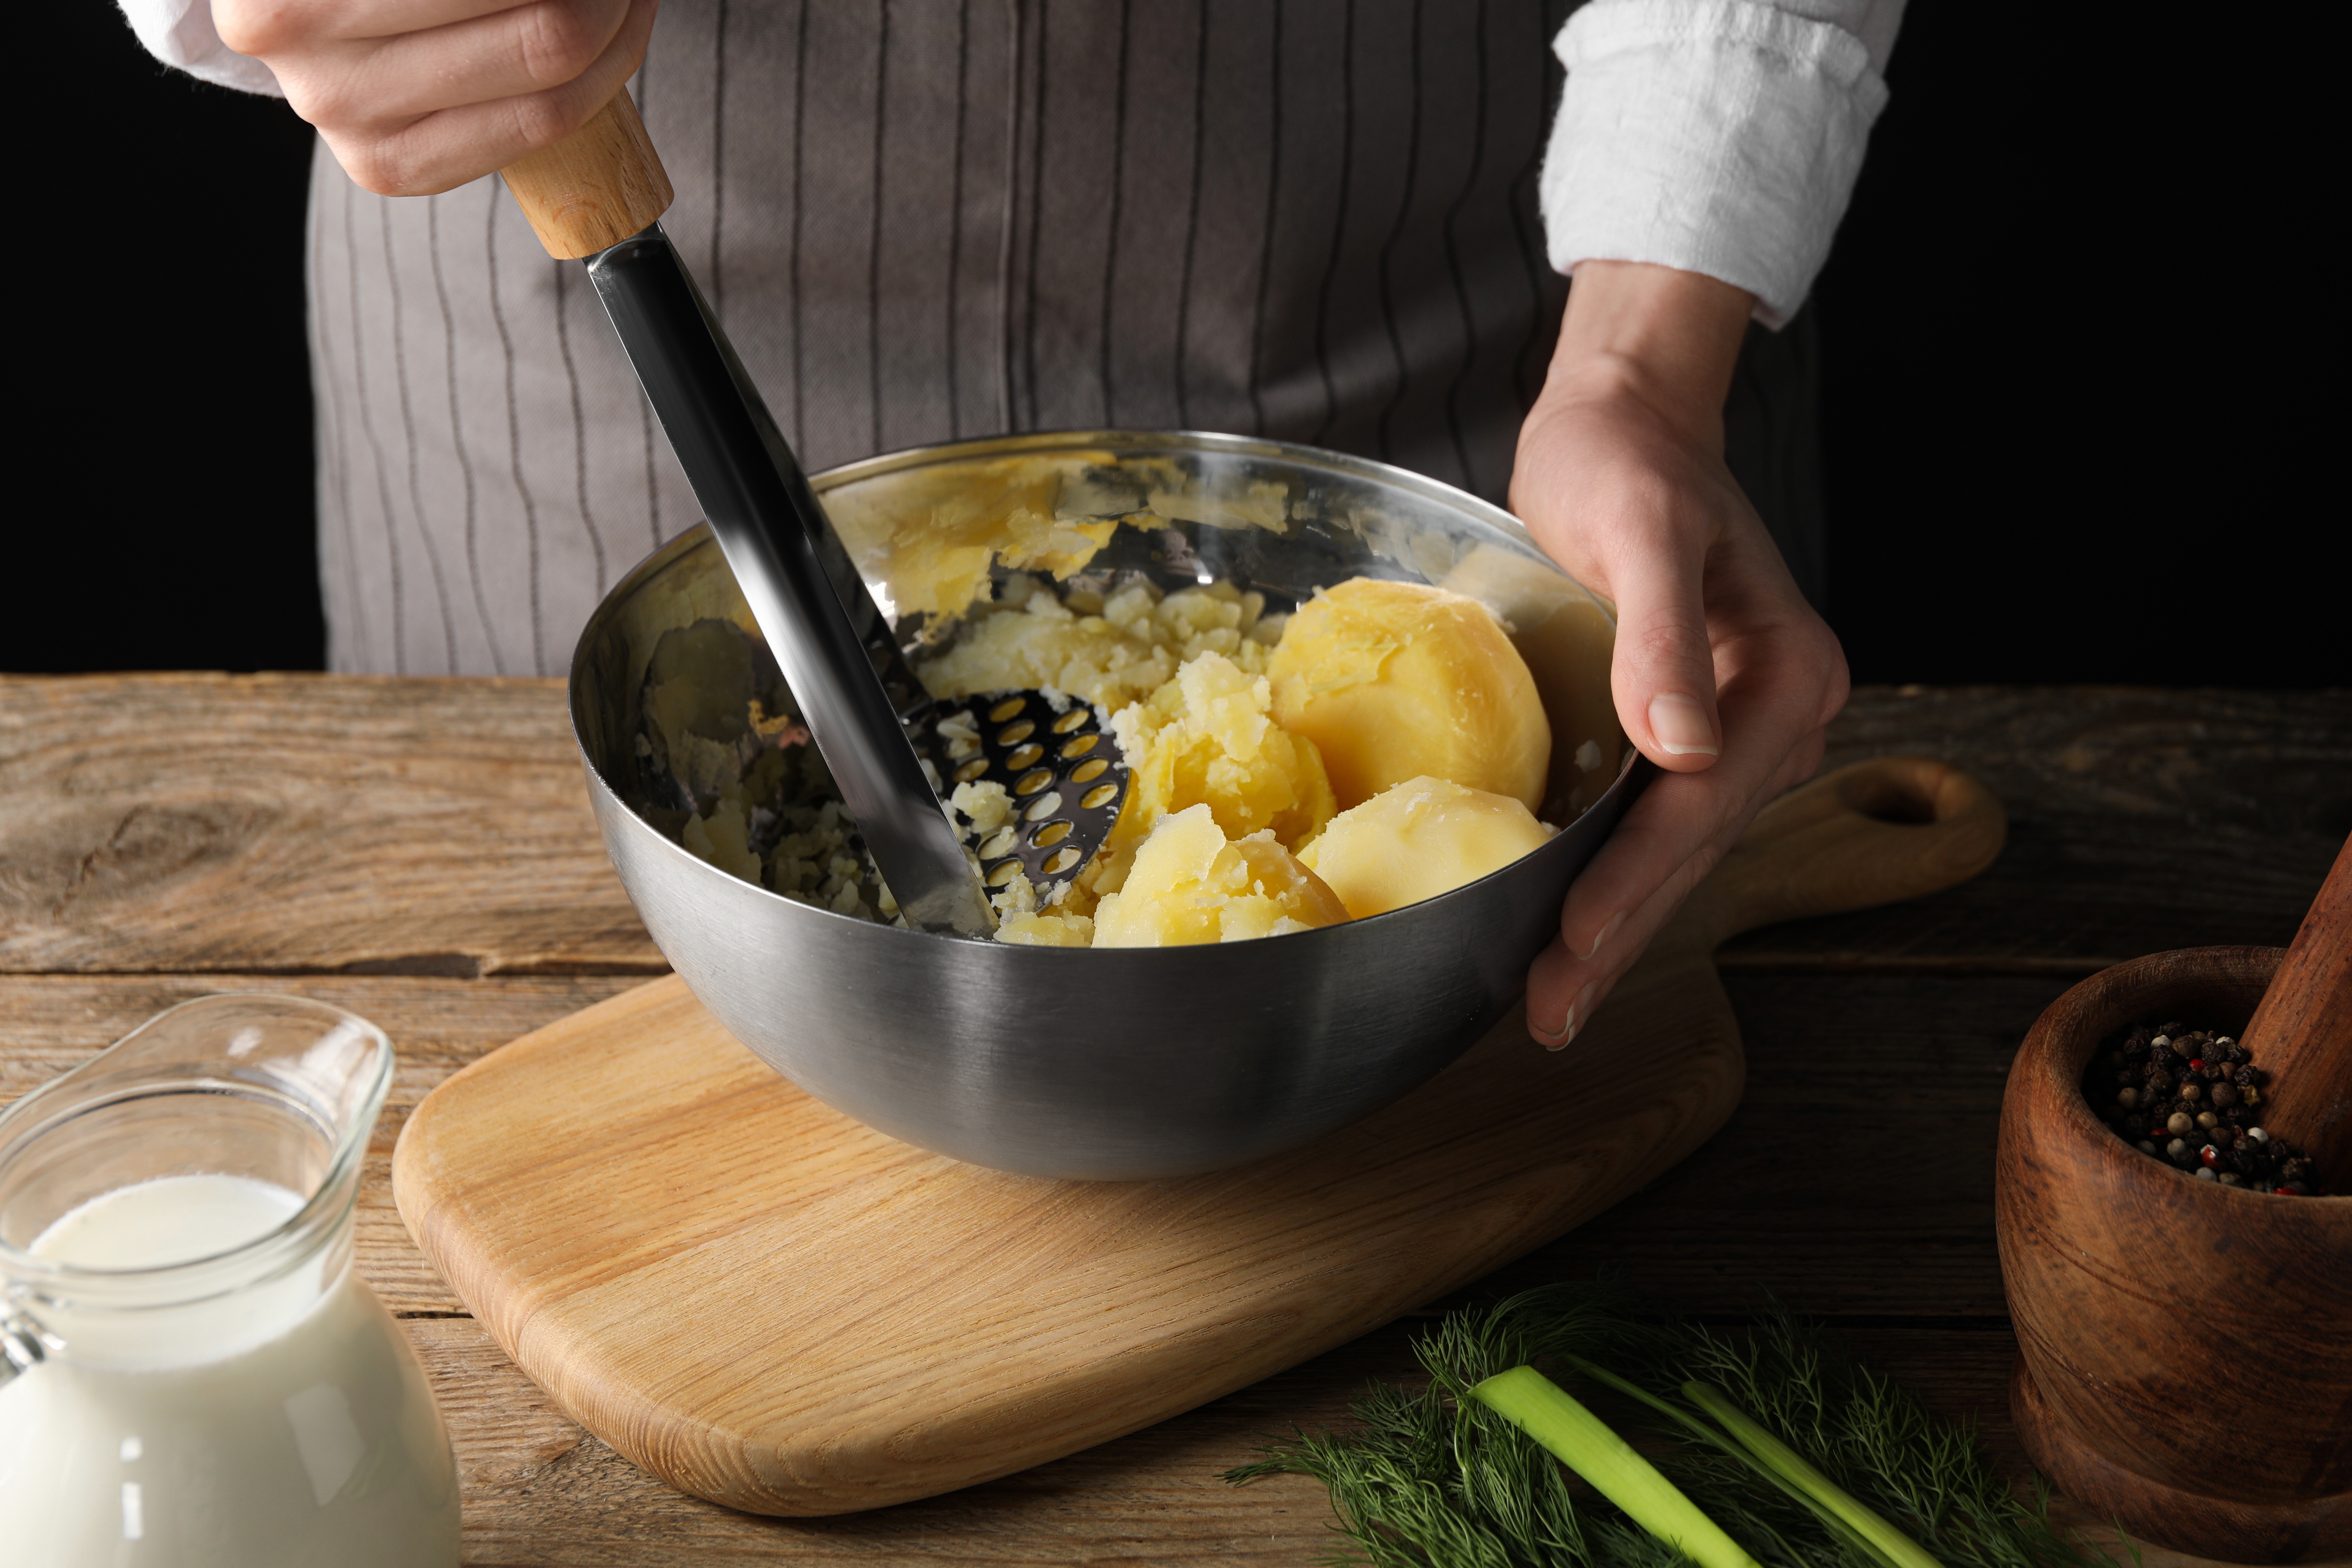 A person using a potato masher | Source: Shutterstock